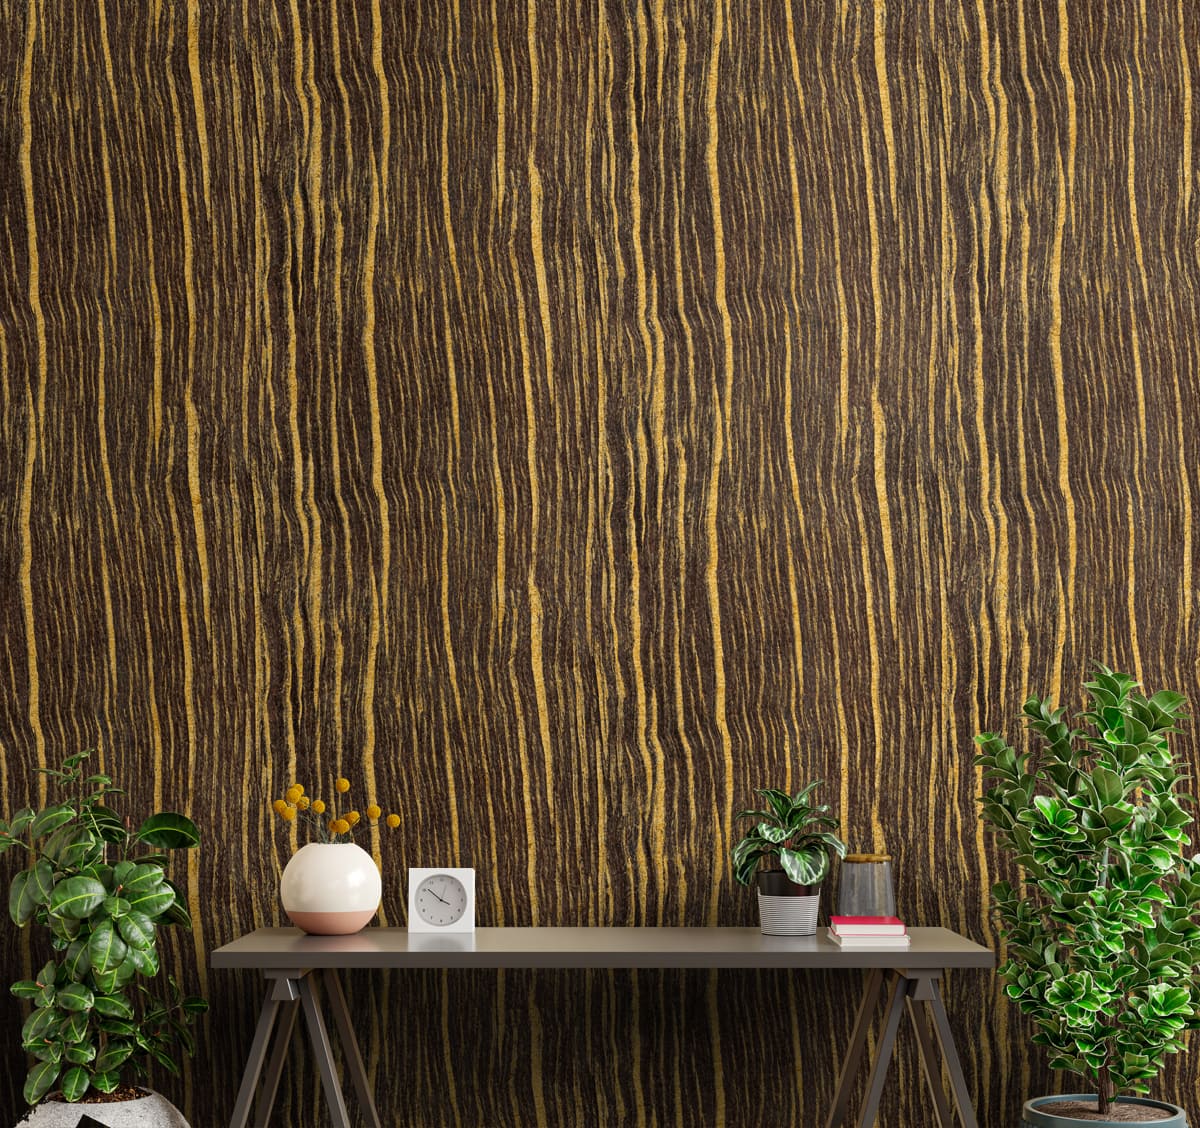 Charisma, A Natural Cork Inspired Wallpaper Design